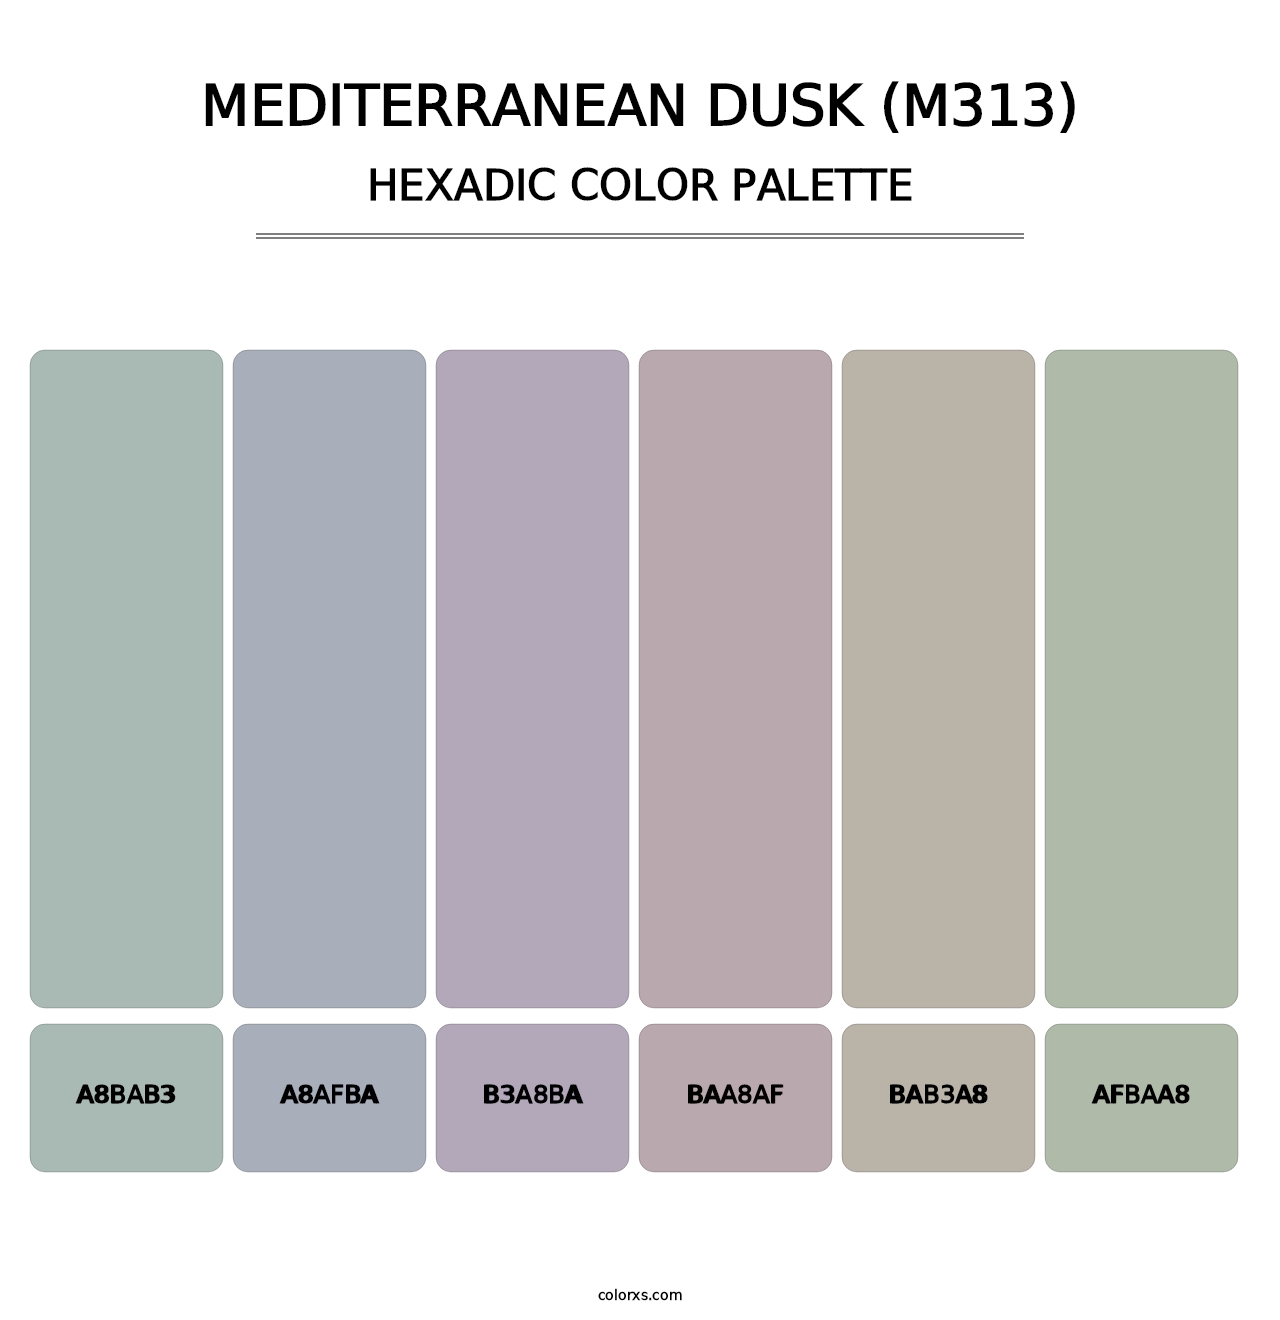 Mediterranean Dusk (M313) - Hexadic Color Palette